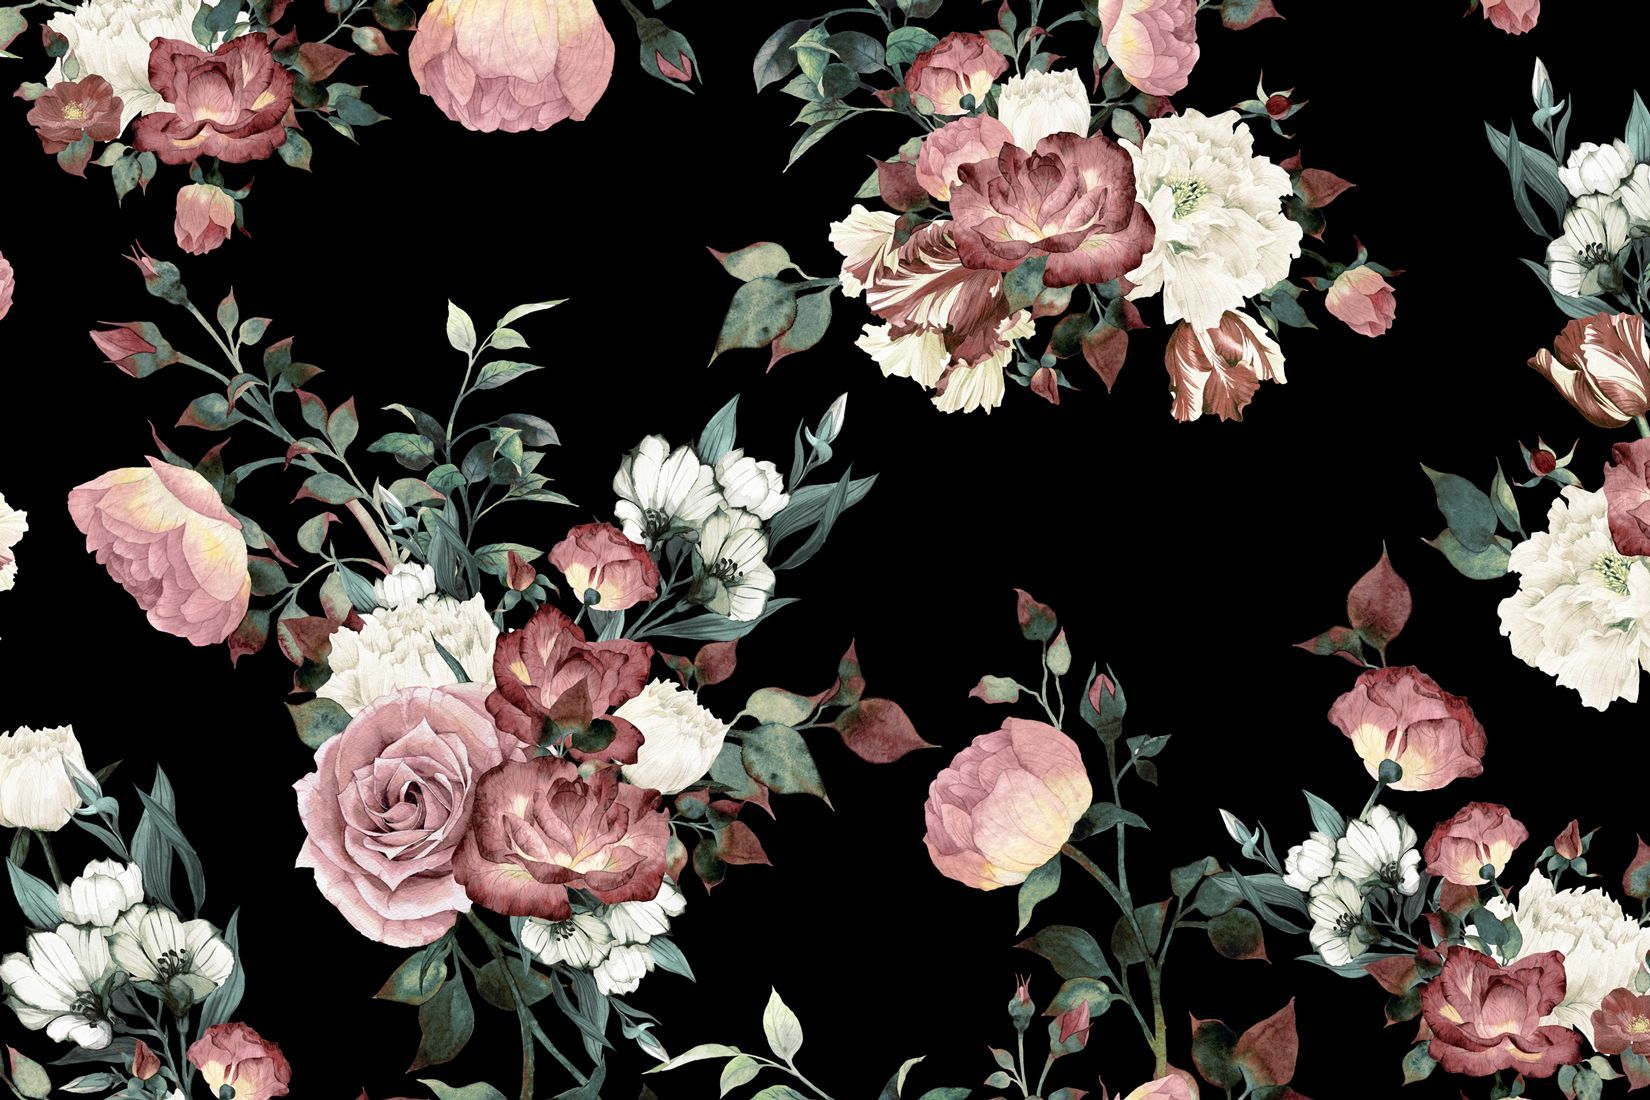 Vintage Rose Wallpapers - Los mejores fondos de Vintage Rose gratis